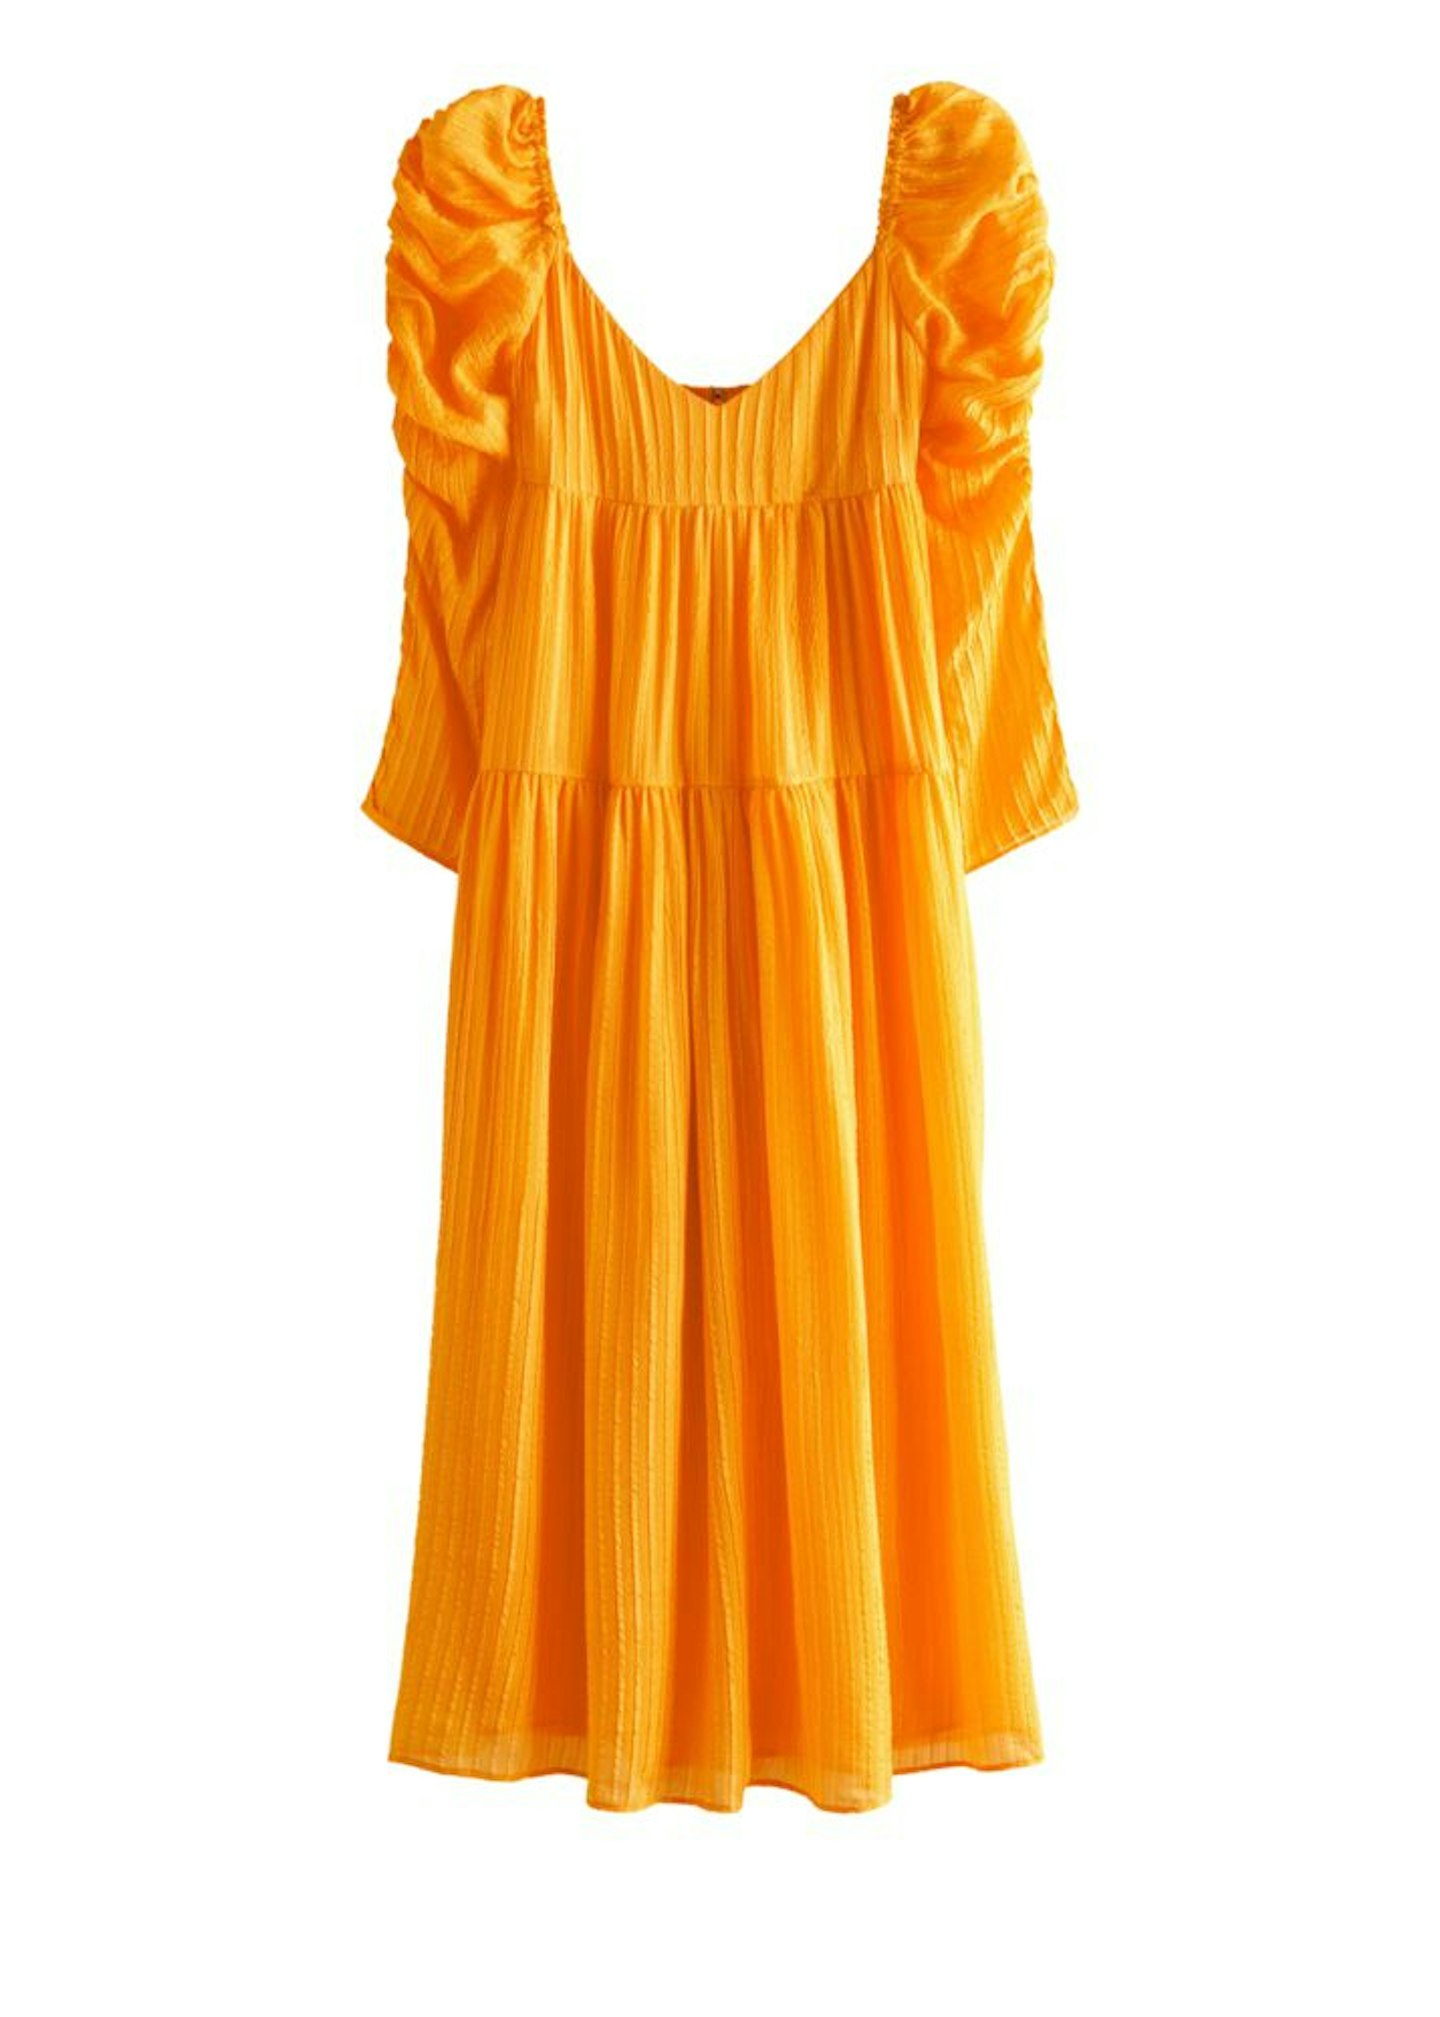 Rejina Pyo & Other Stories, Orange Dress, £175